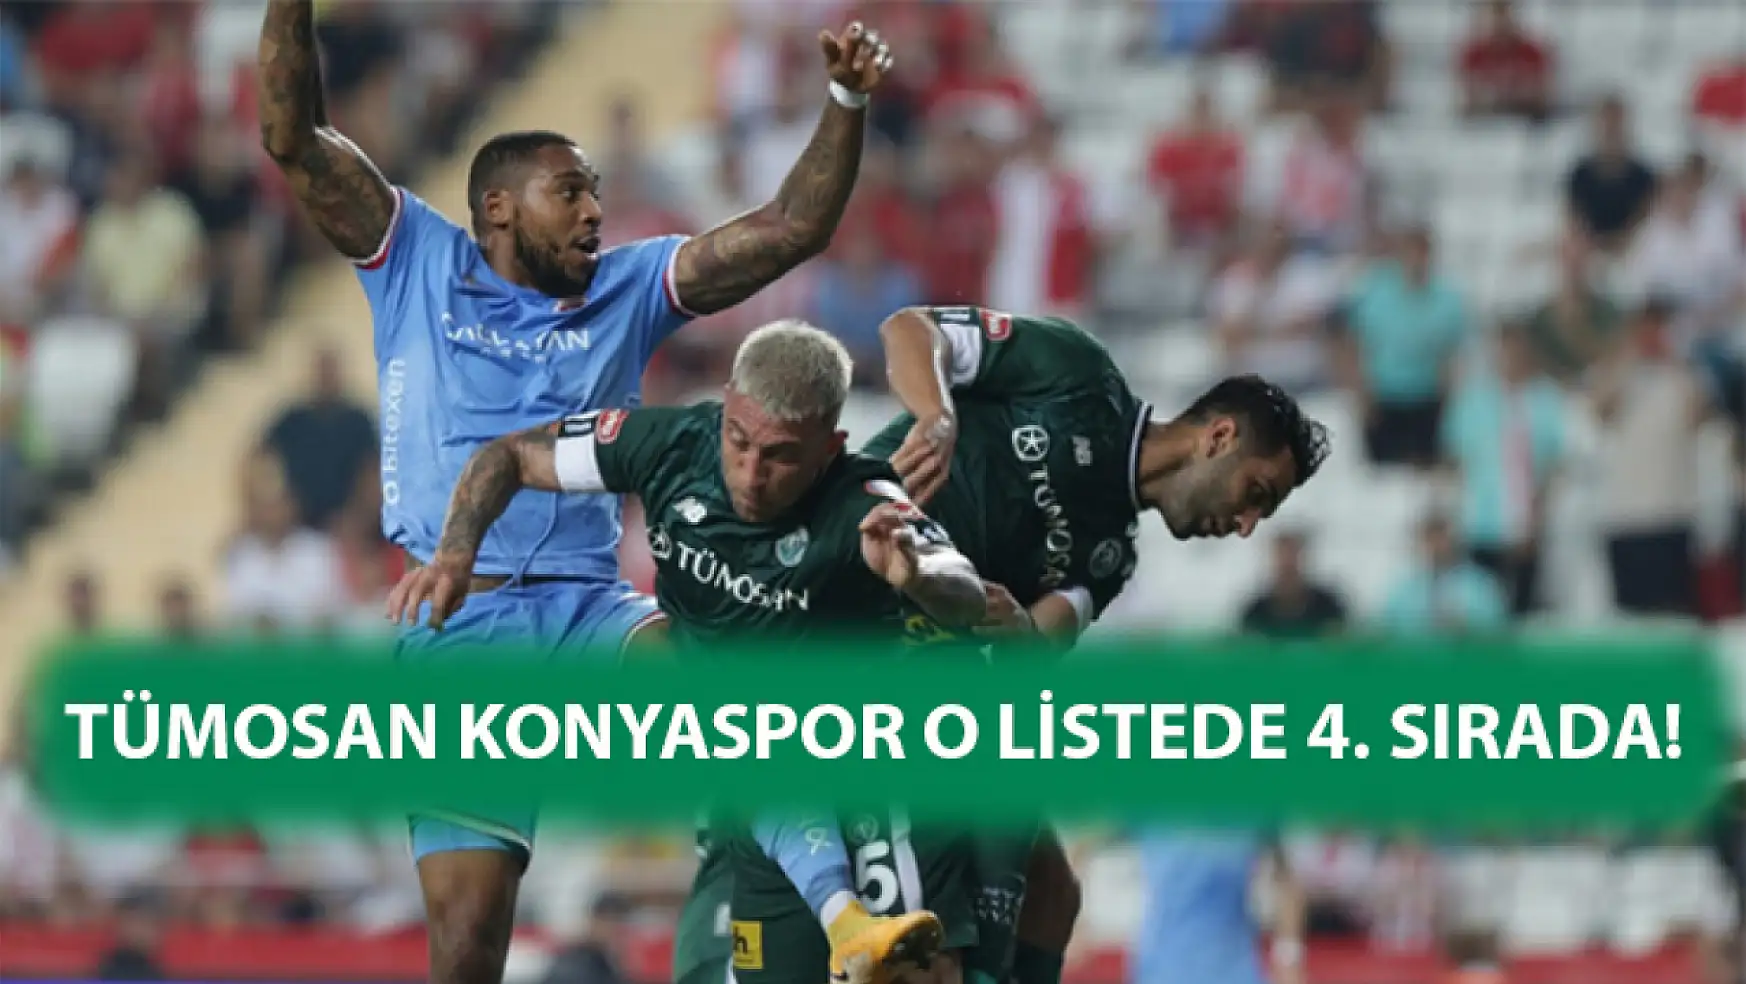 Tümosan Konyaspor o listede 4. Sırada!